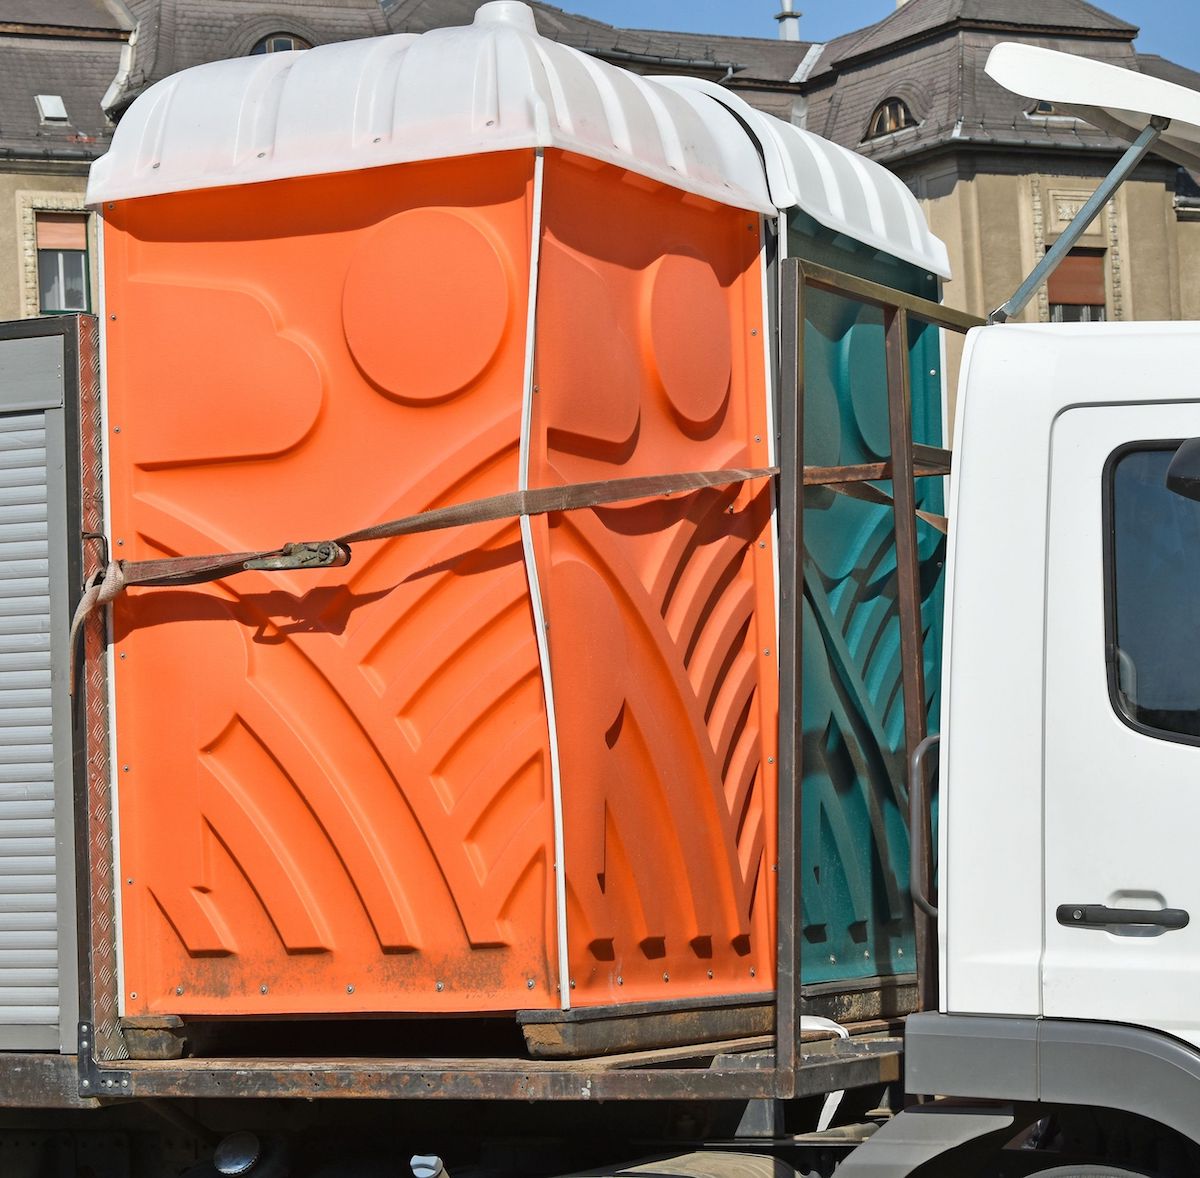 Portable toilets on a vehicle